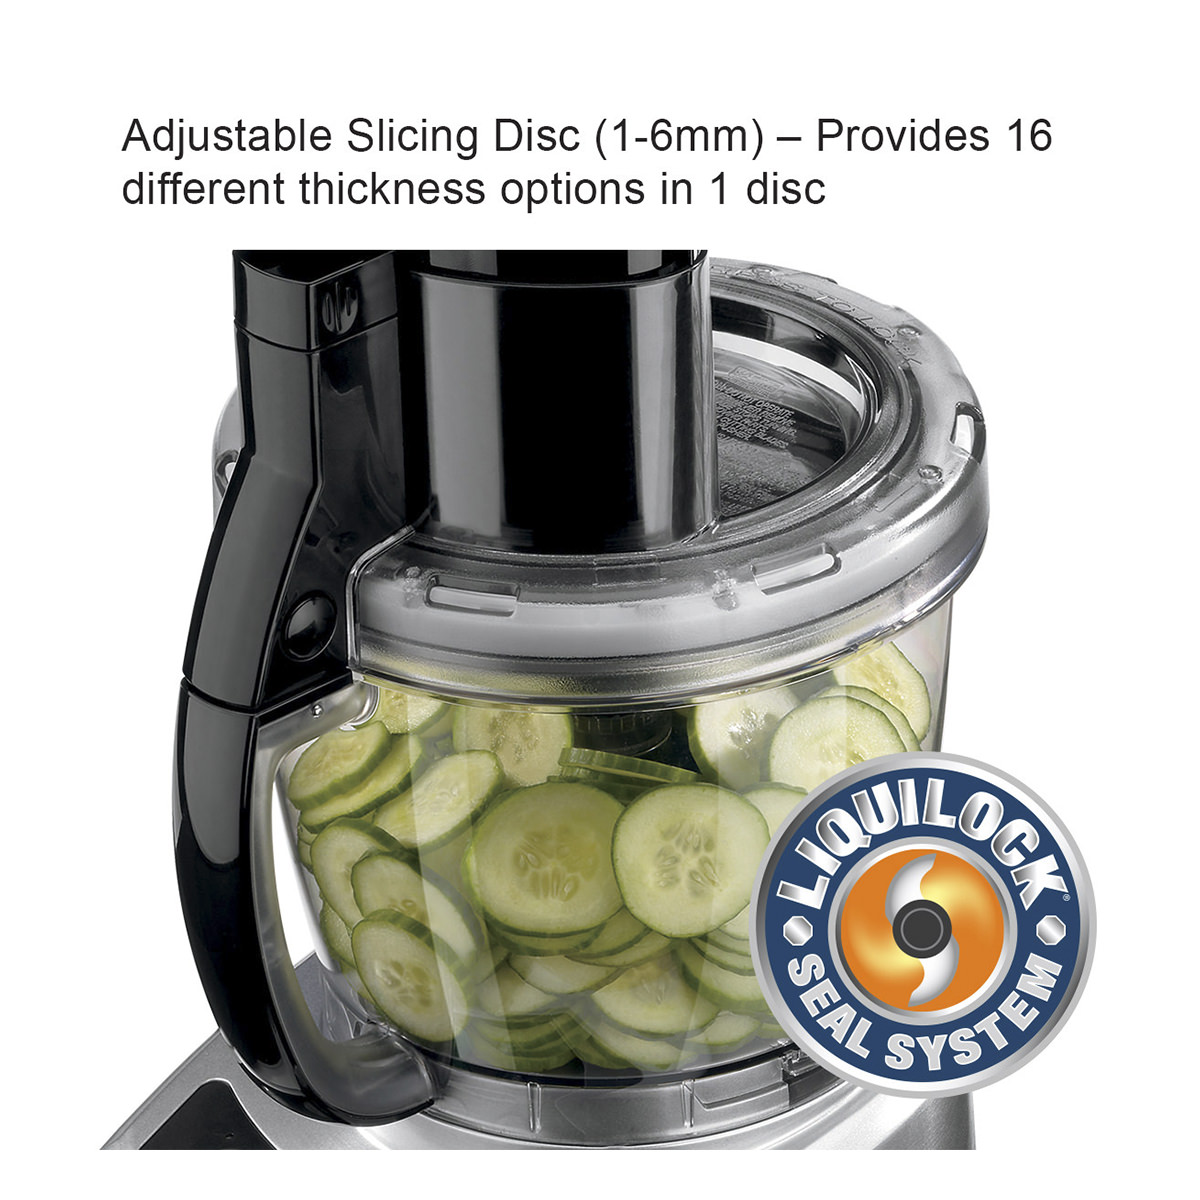 Waring 4-Qt Batch Bowl Food Processor With Liquilock Seal System